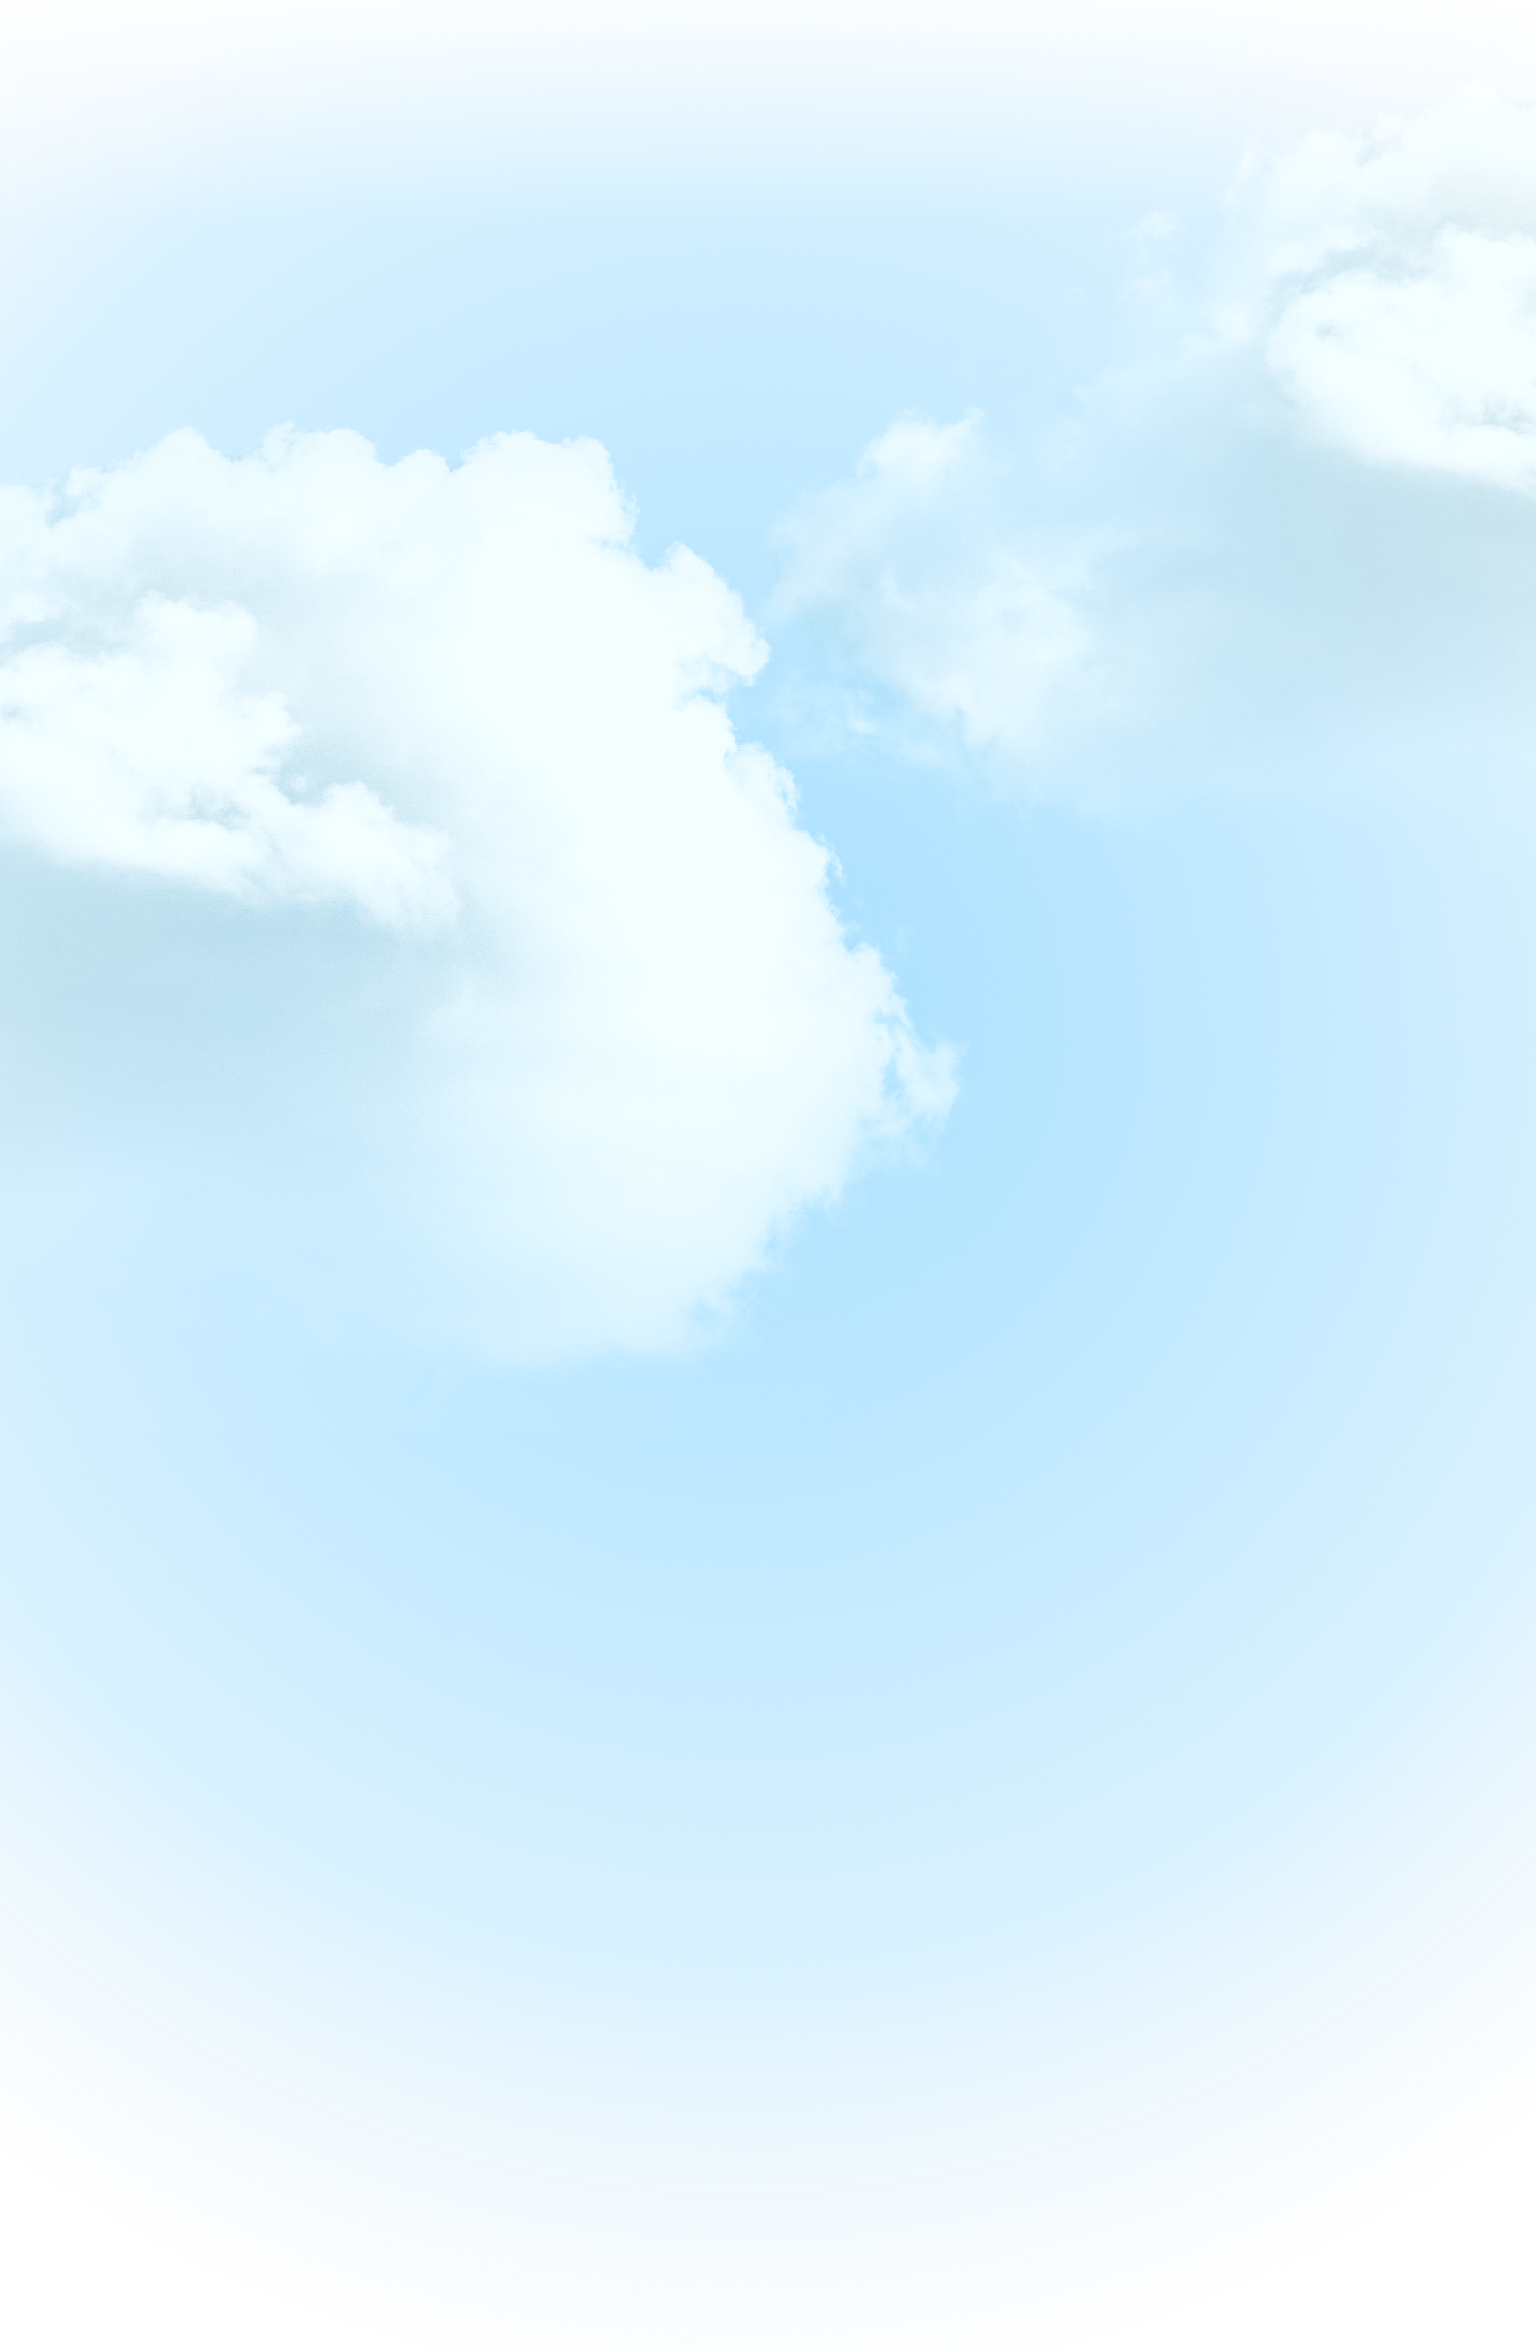 background image of clouds & gradient blue colour.